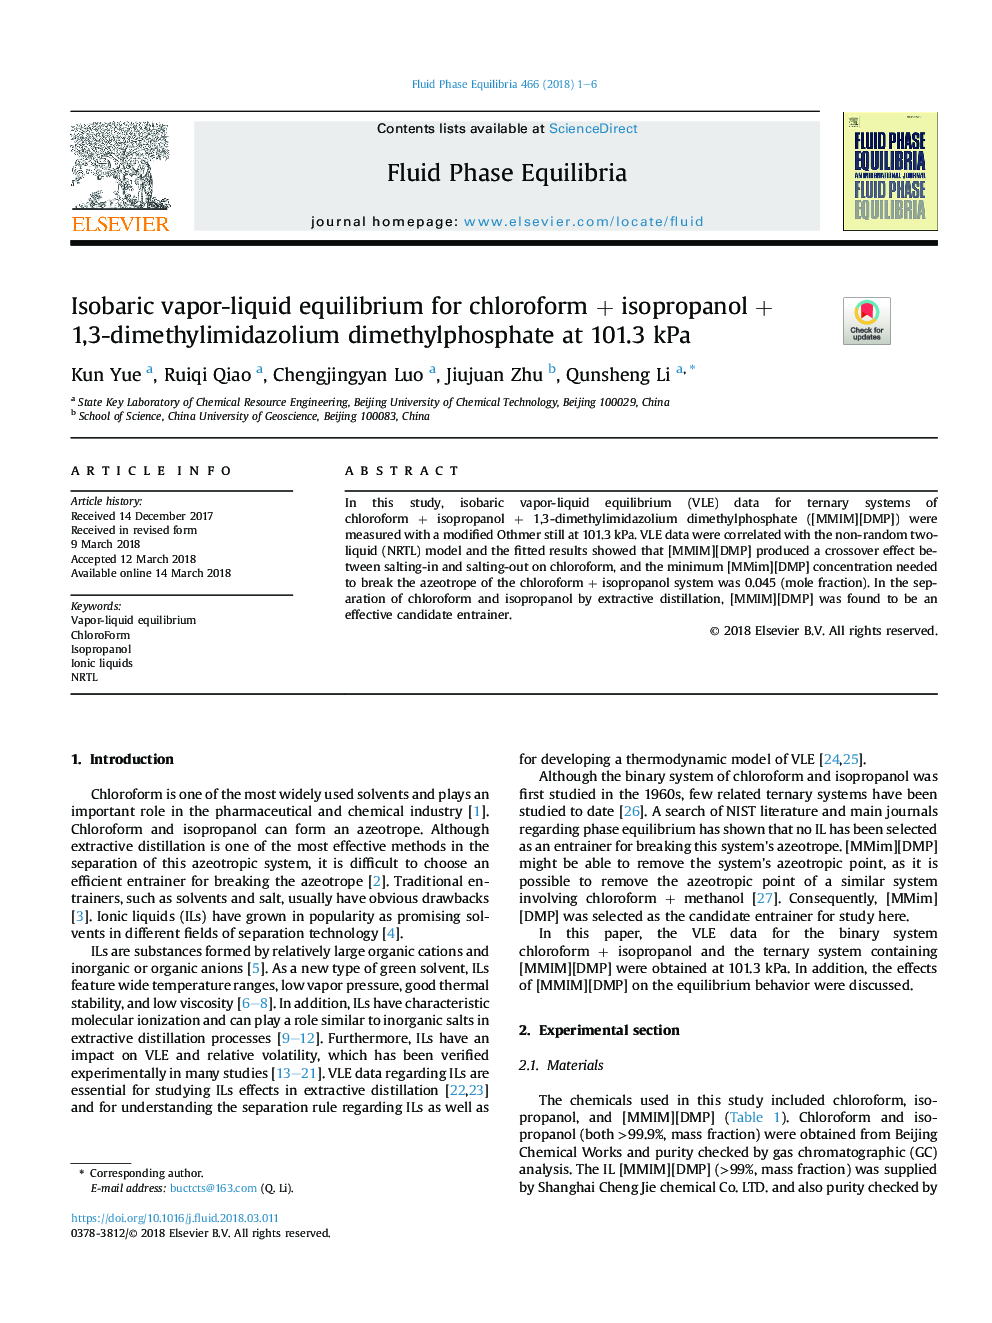 Isobaric vapor-liquid equilibrium for chloroformÂ + isopropanolÂ + 1,3-dimethylimidazolium dimethylphosphate at 101.3Â kPa